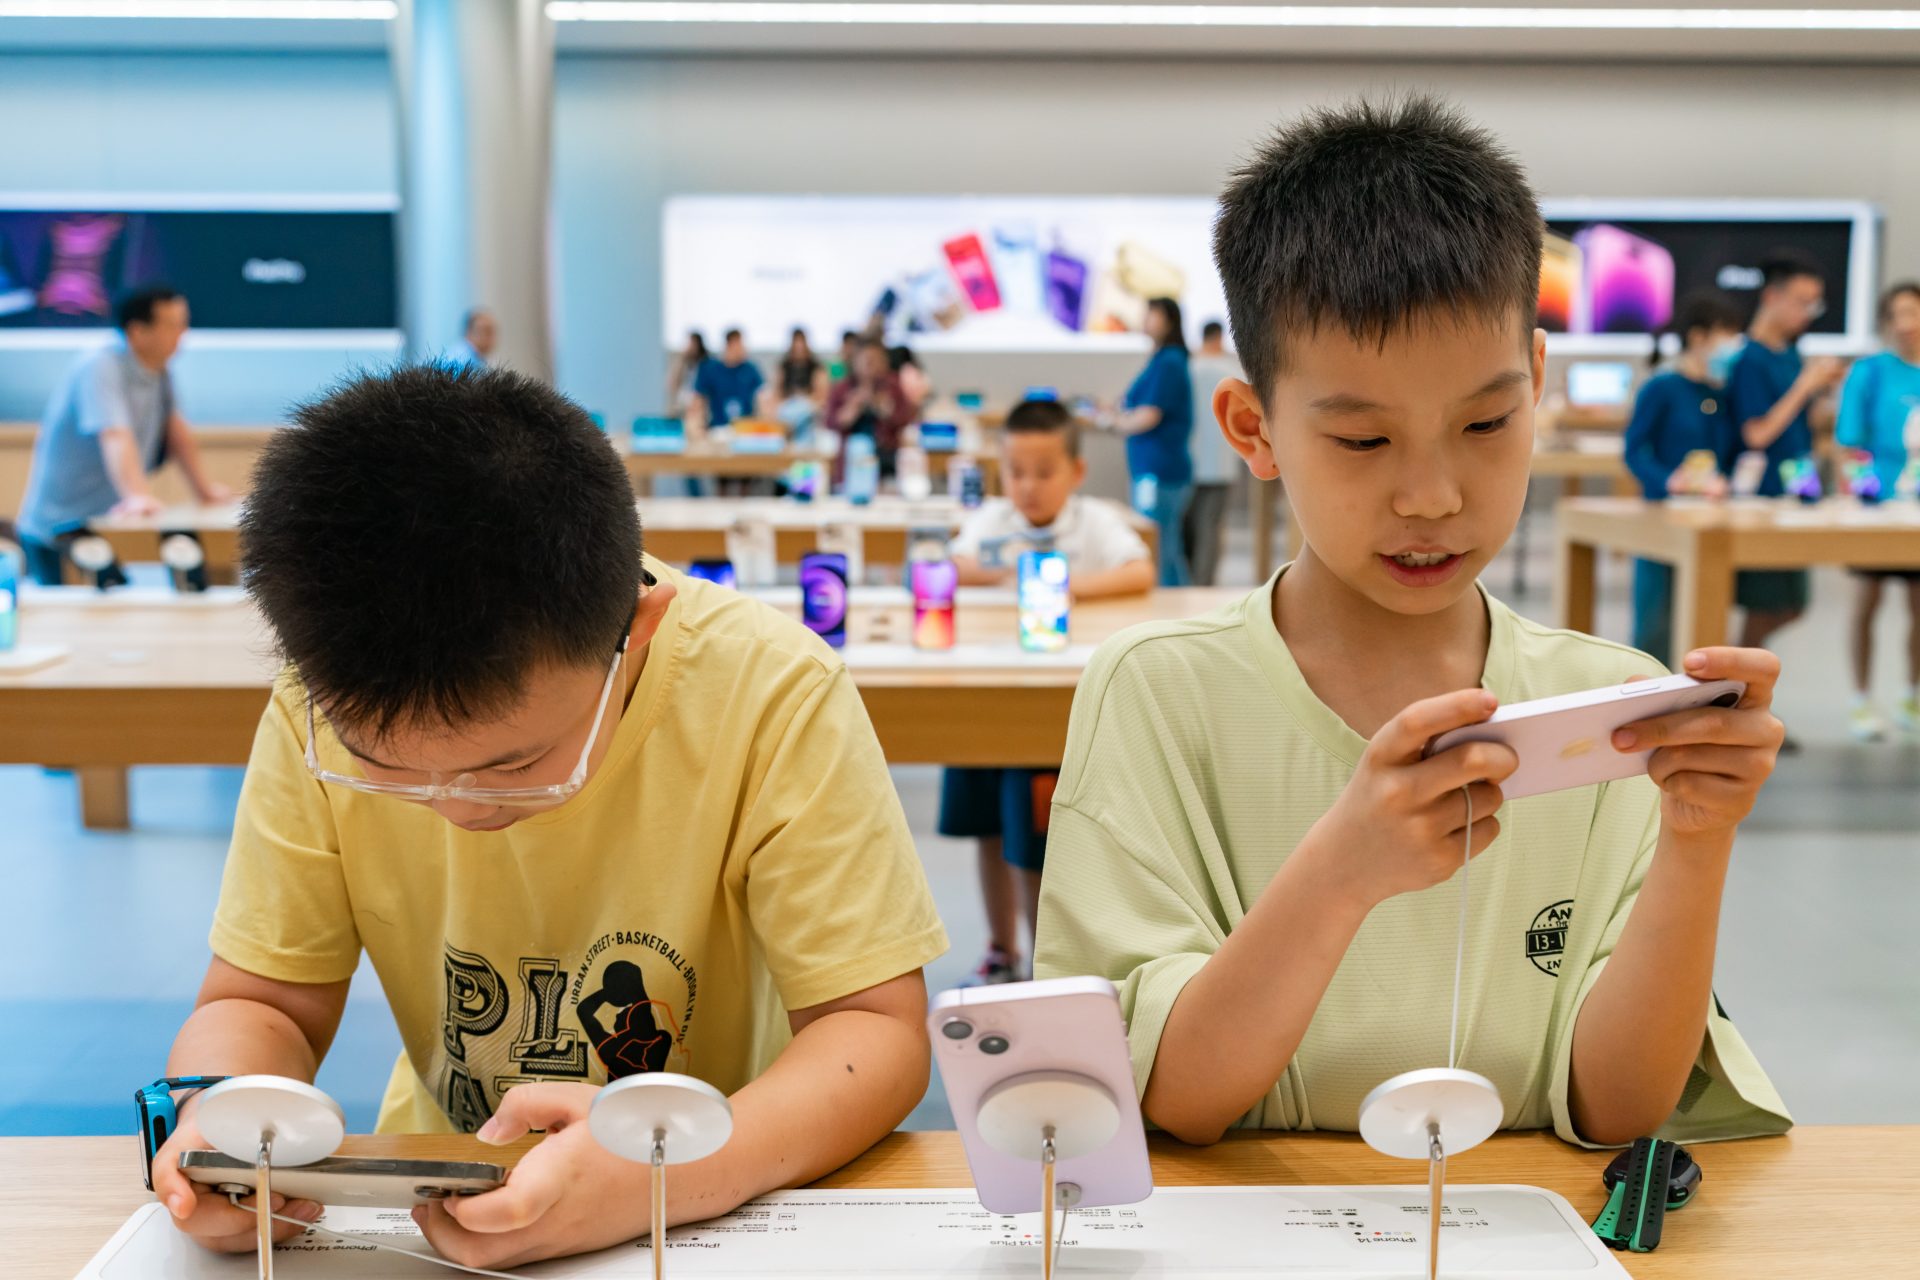 iPhone in China bald verboten?